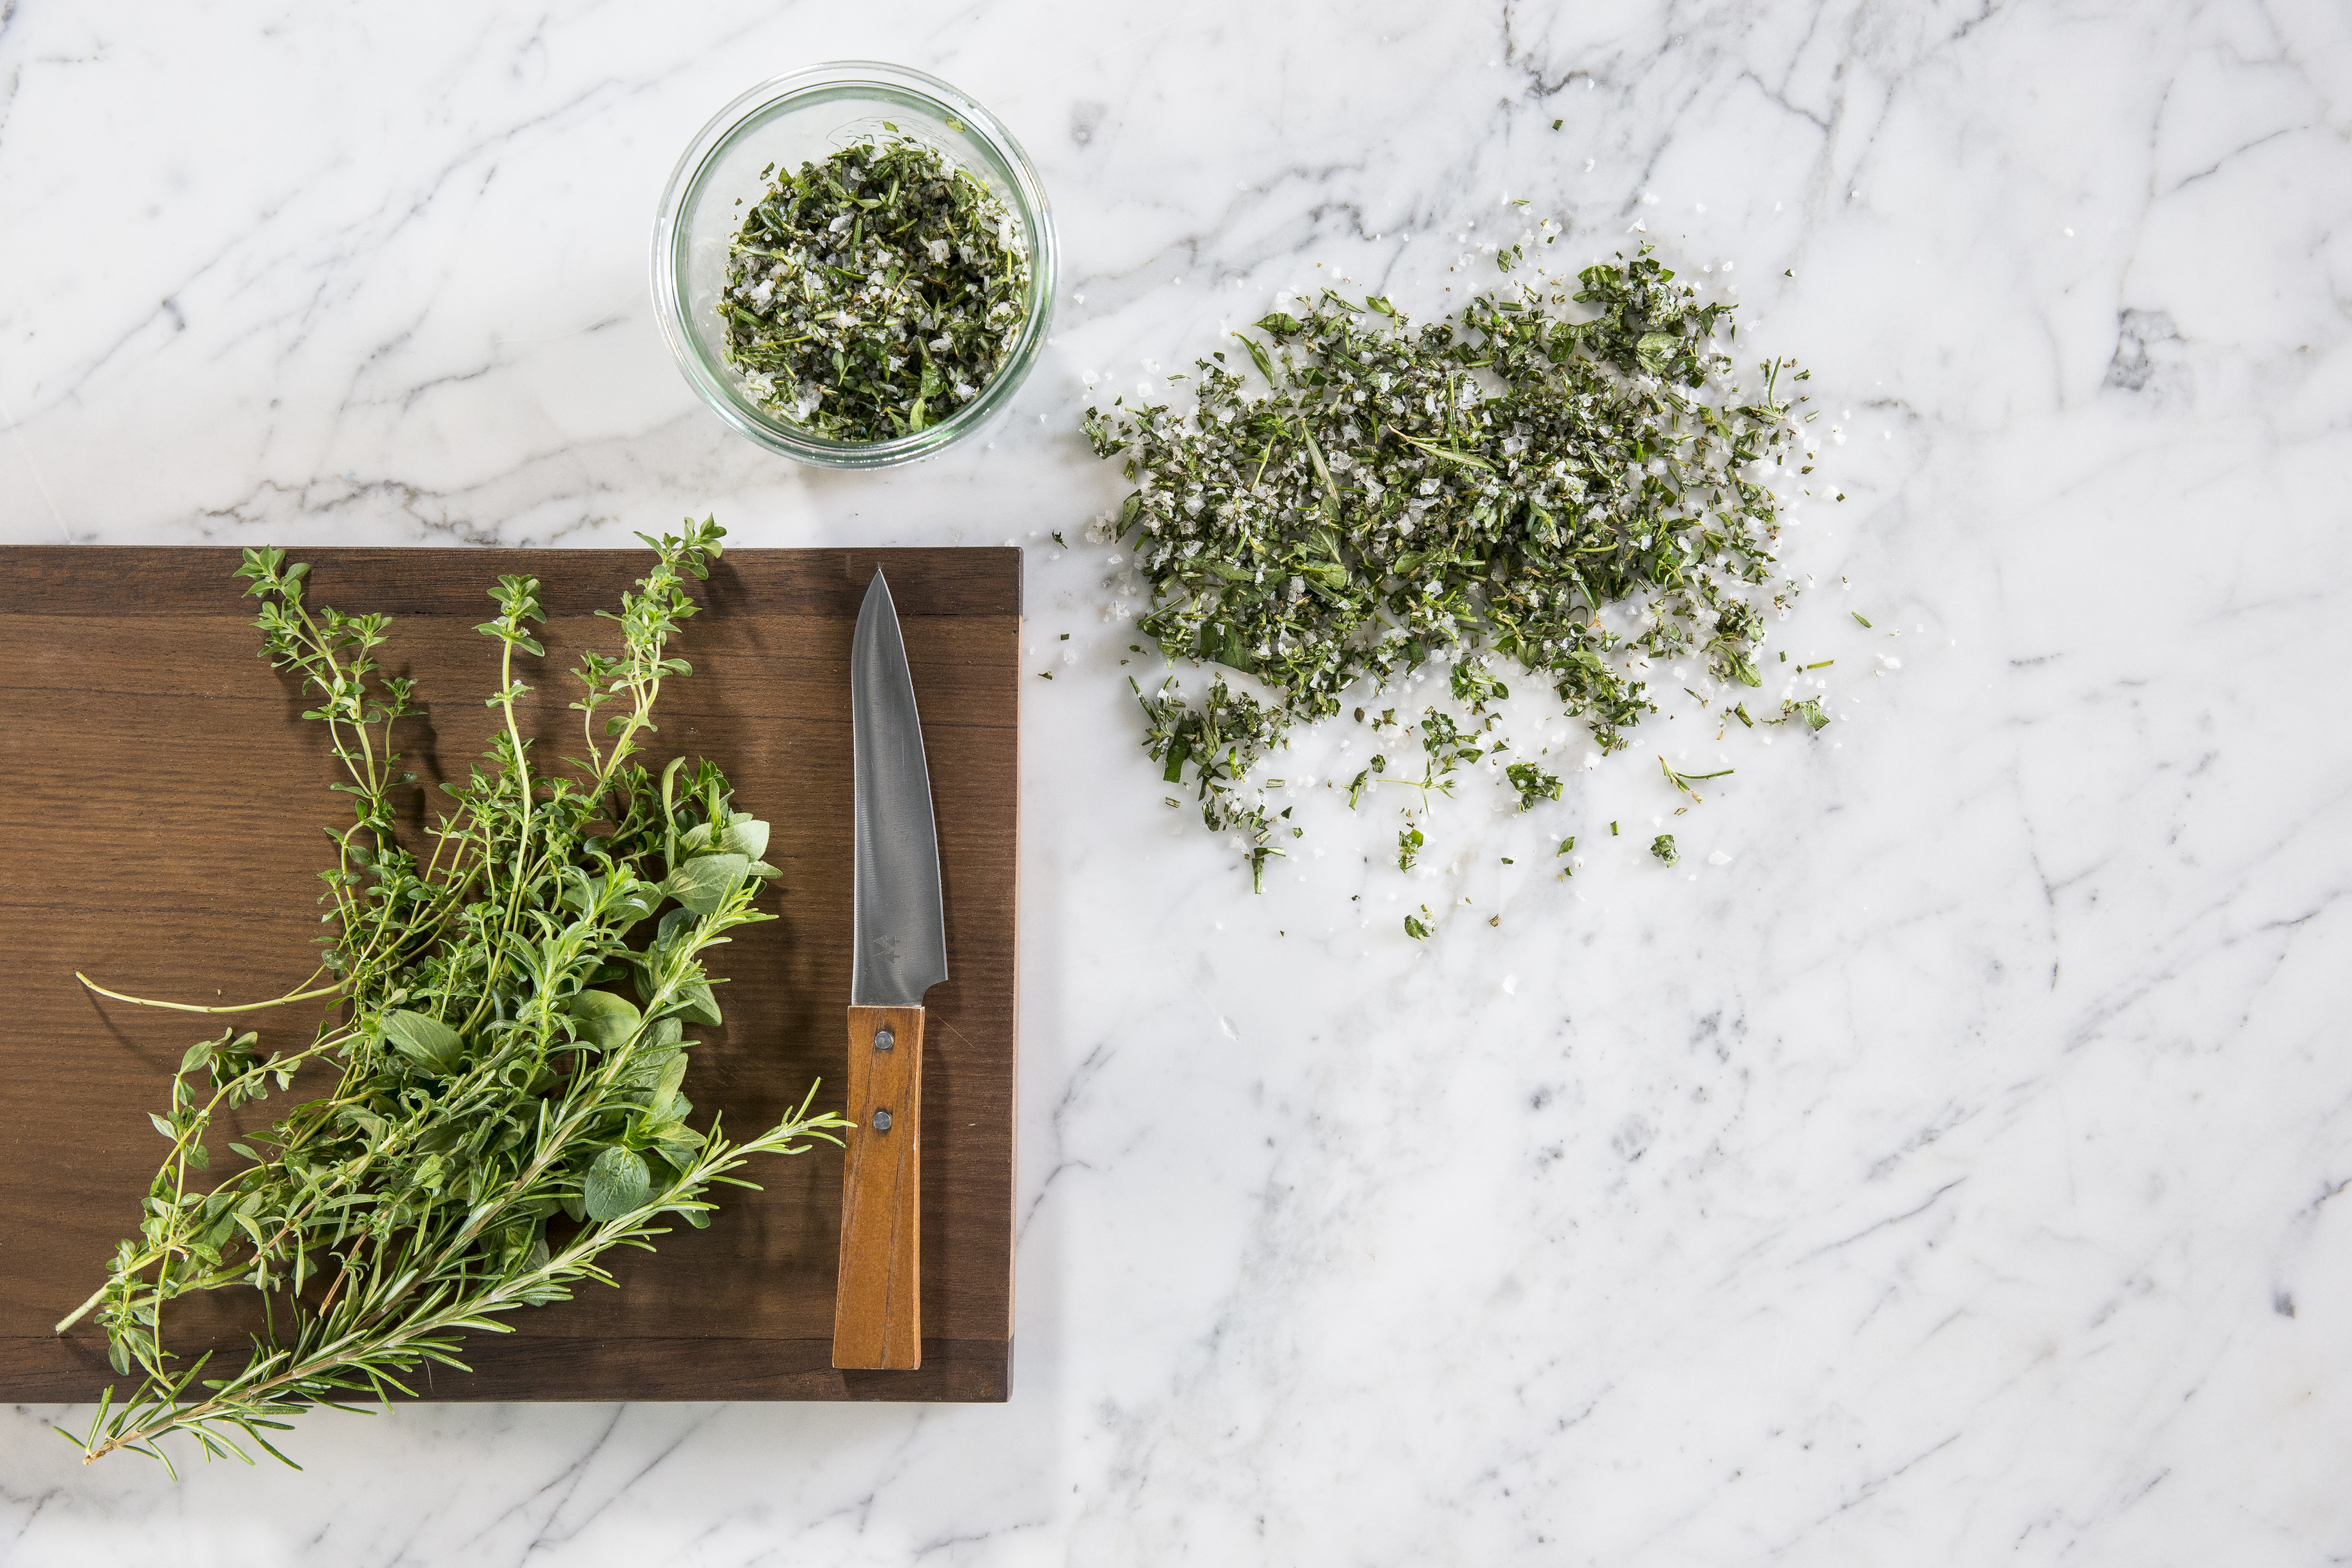 How to Make Salt-Preserved Herbs